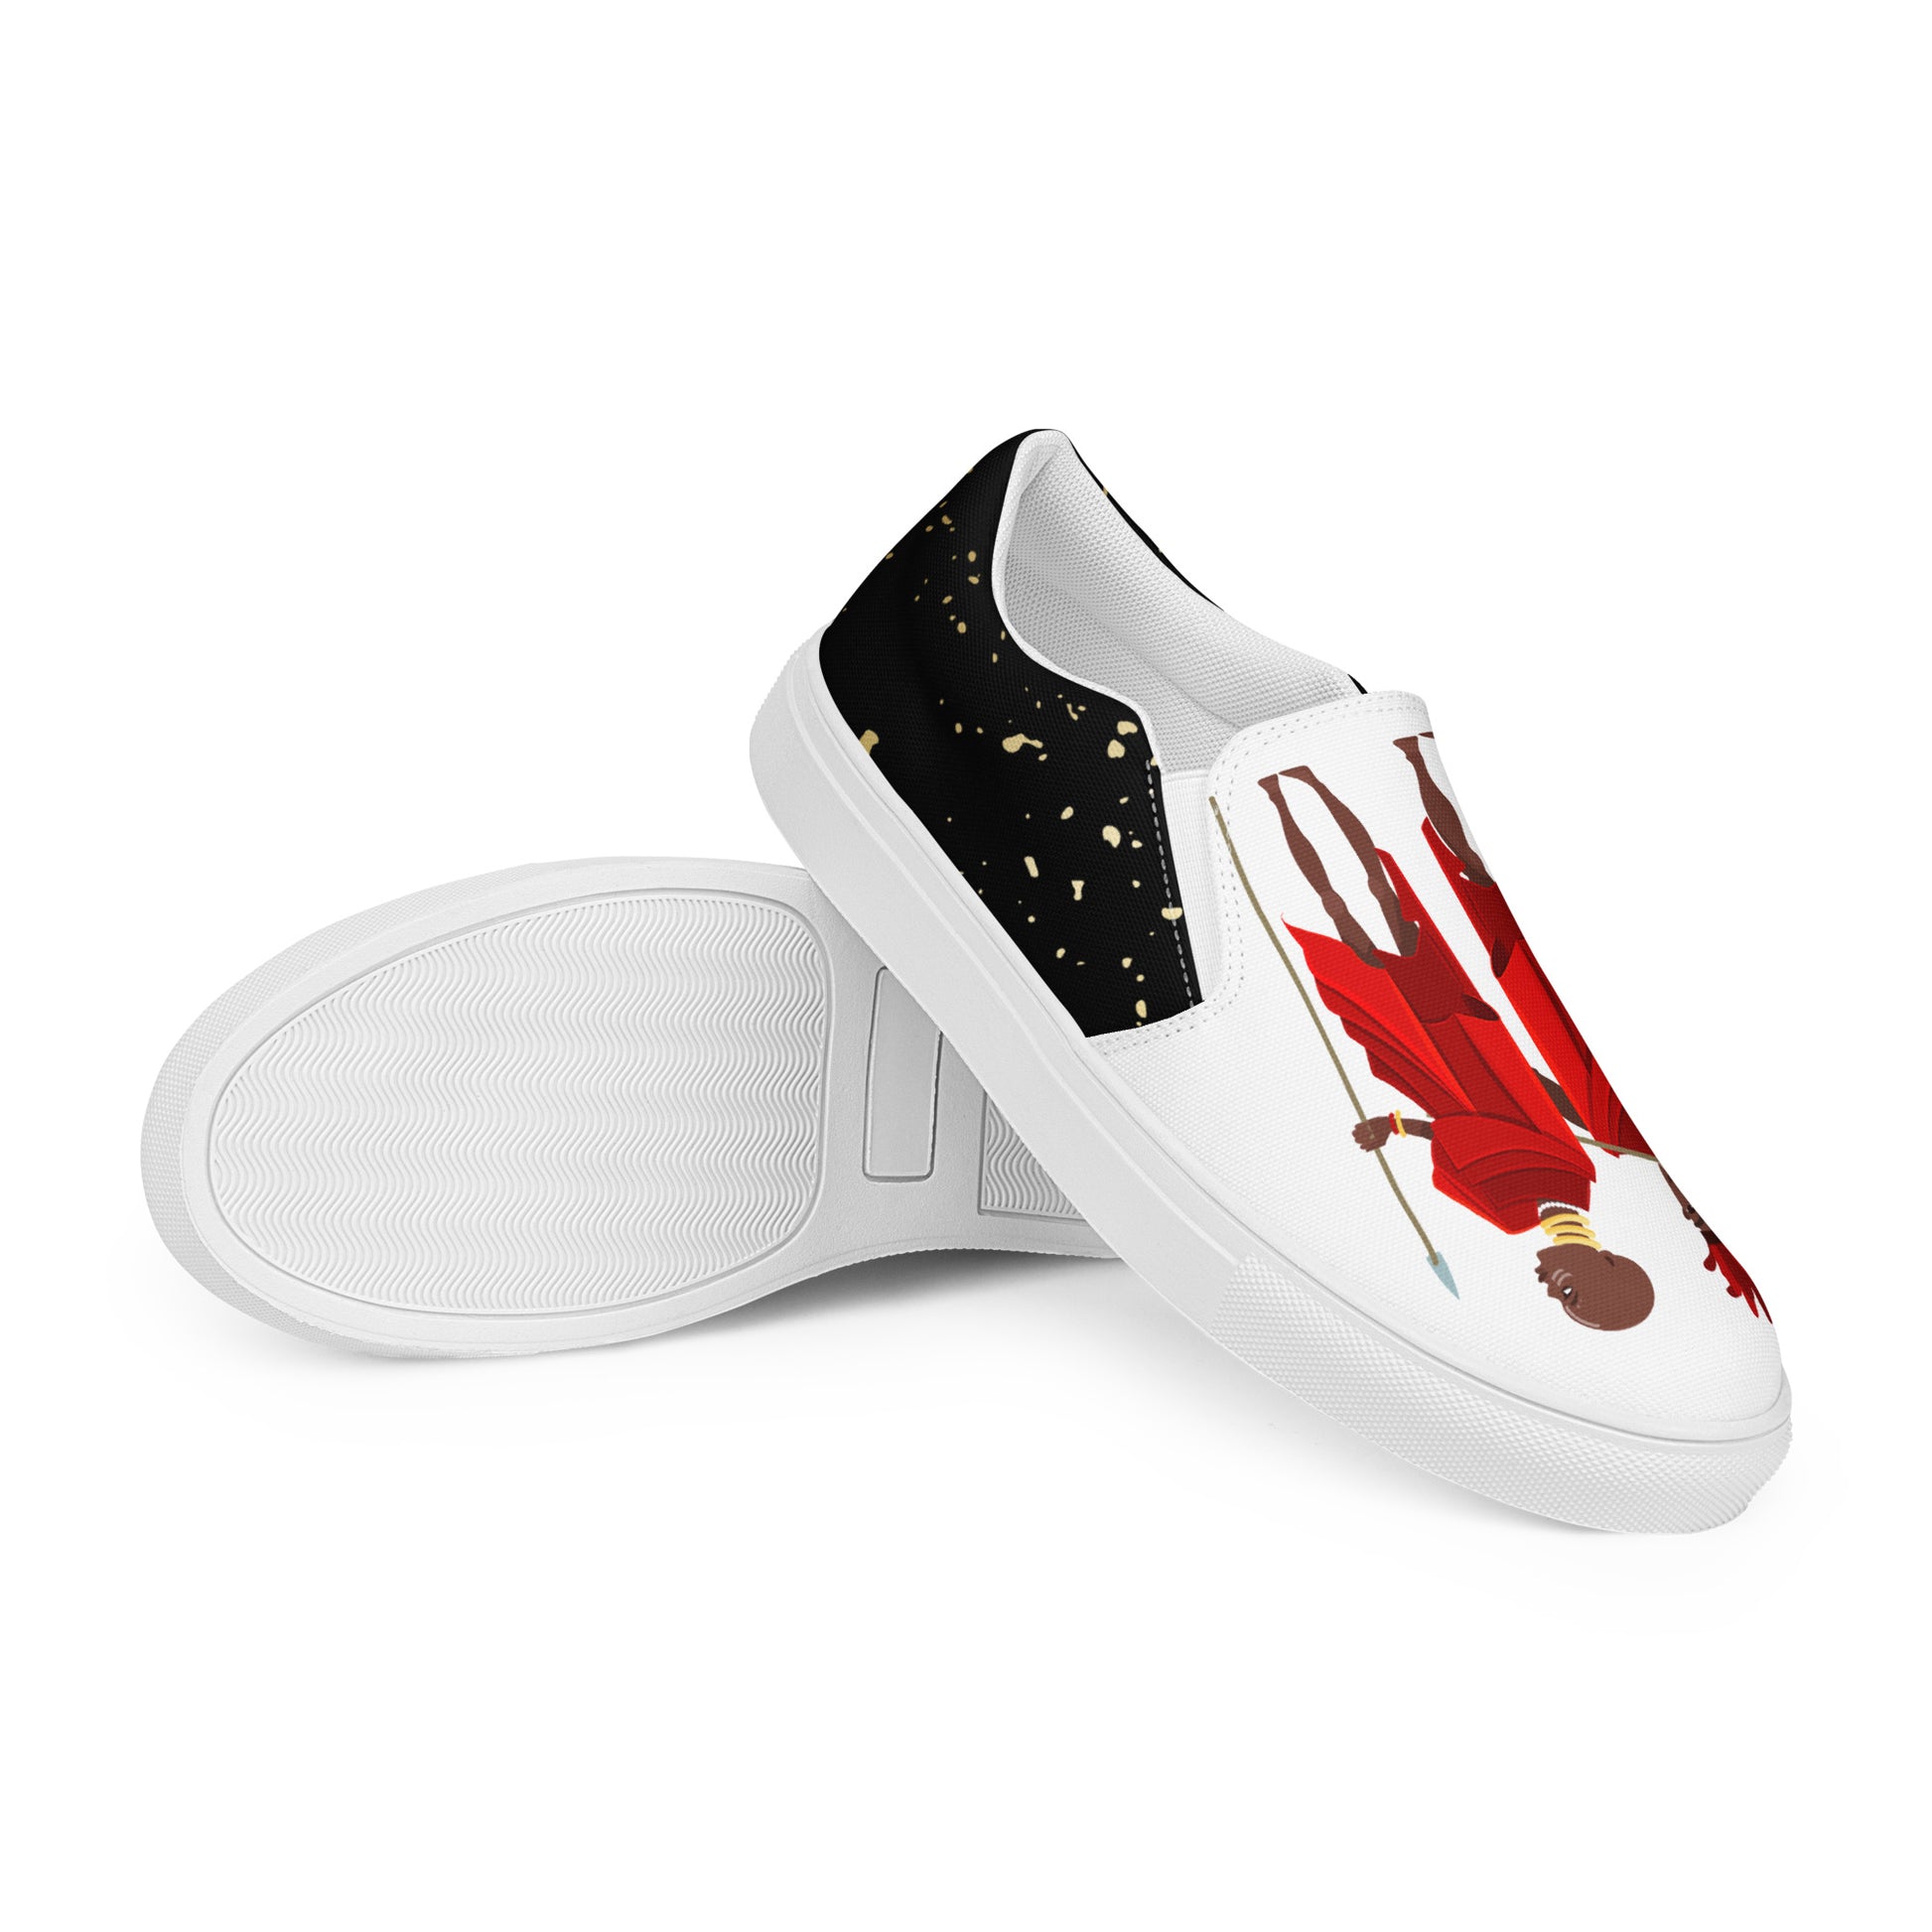 Agojie Midnight Women’s slip-on canvas shoes